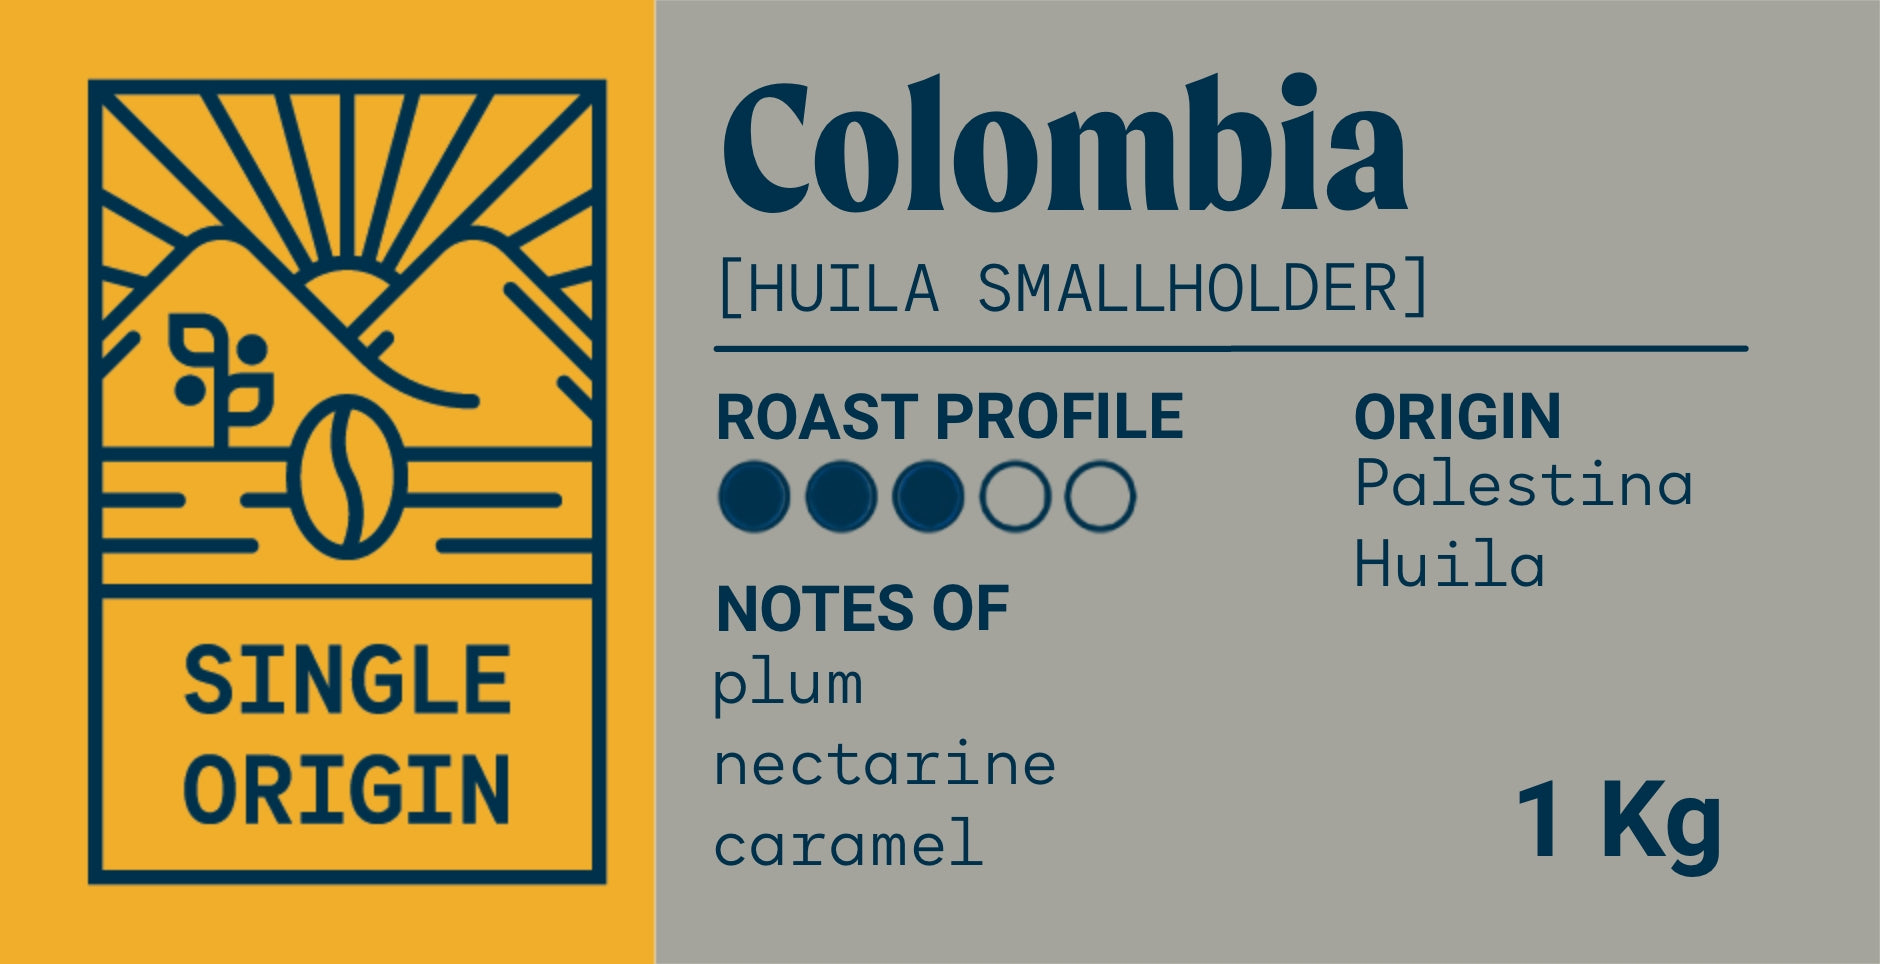 Colombia Smallholder 1 Kg